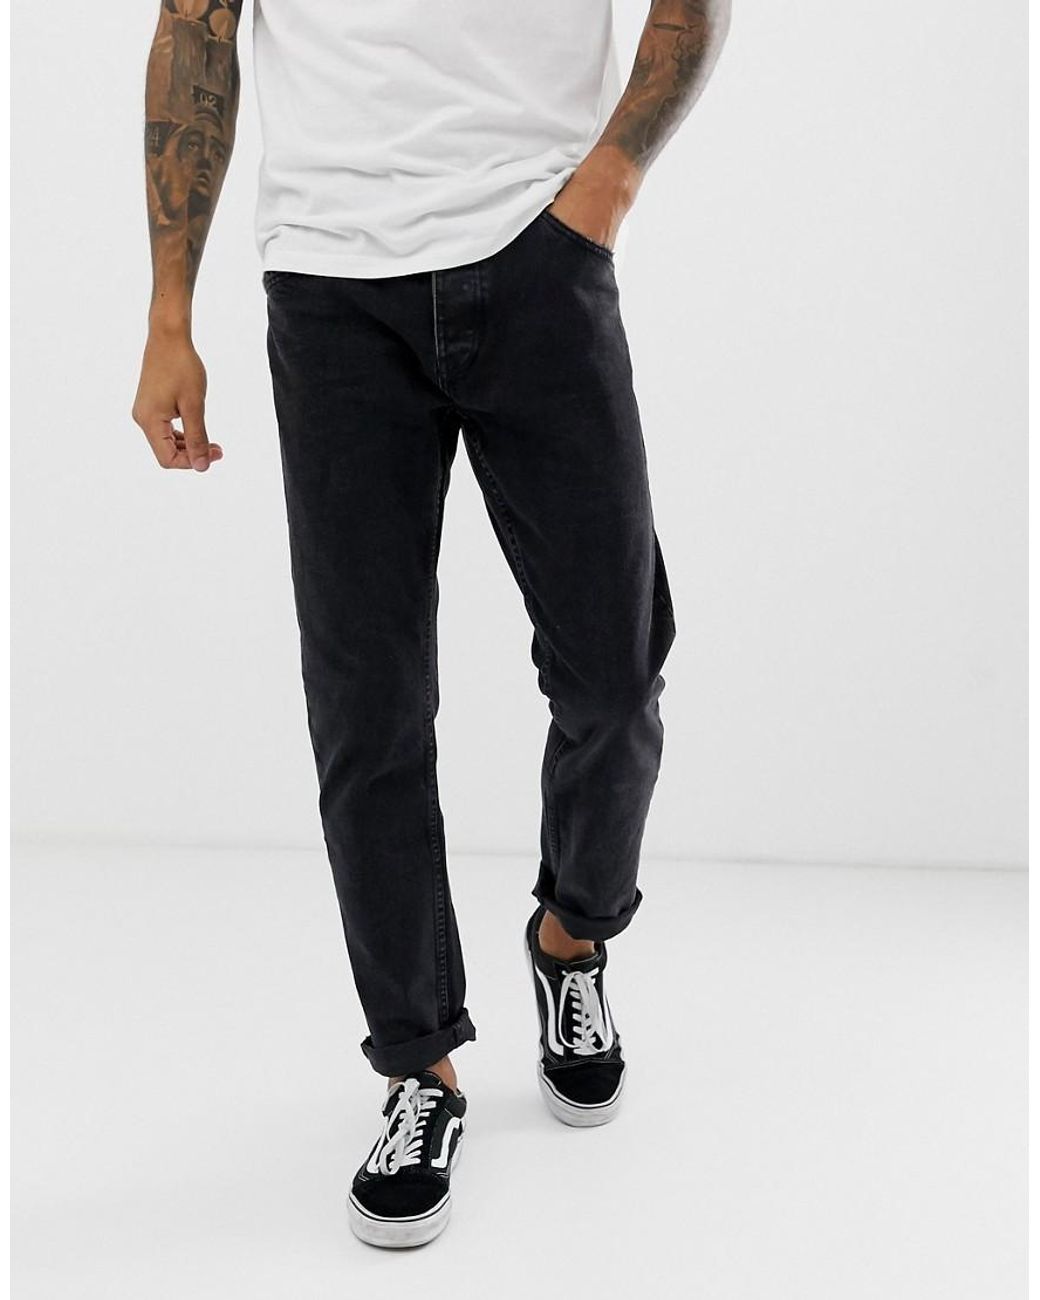 Bershka Denim Slim Fit Jeans in Black for Men - Save 38% - Lyst